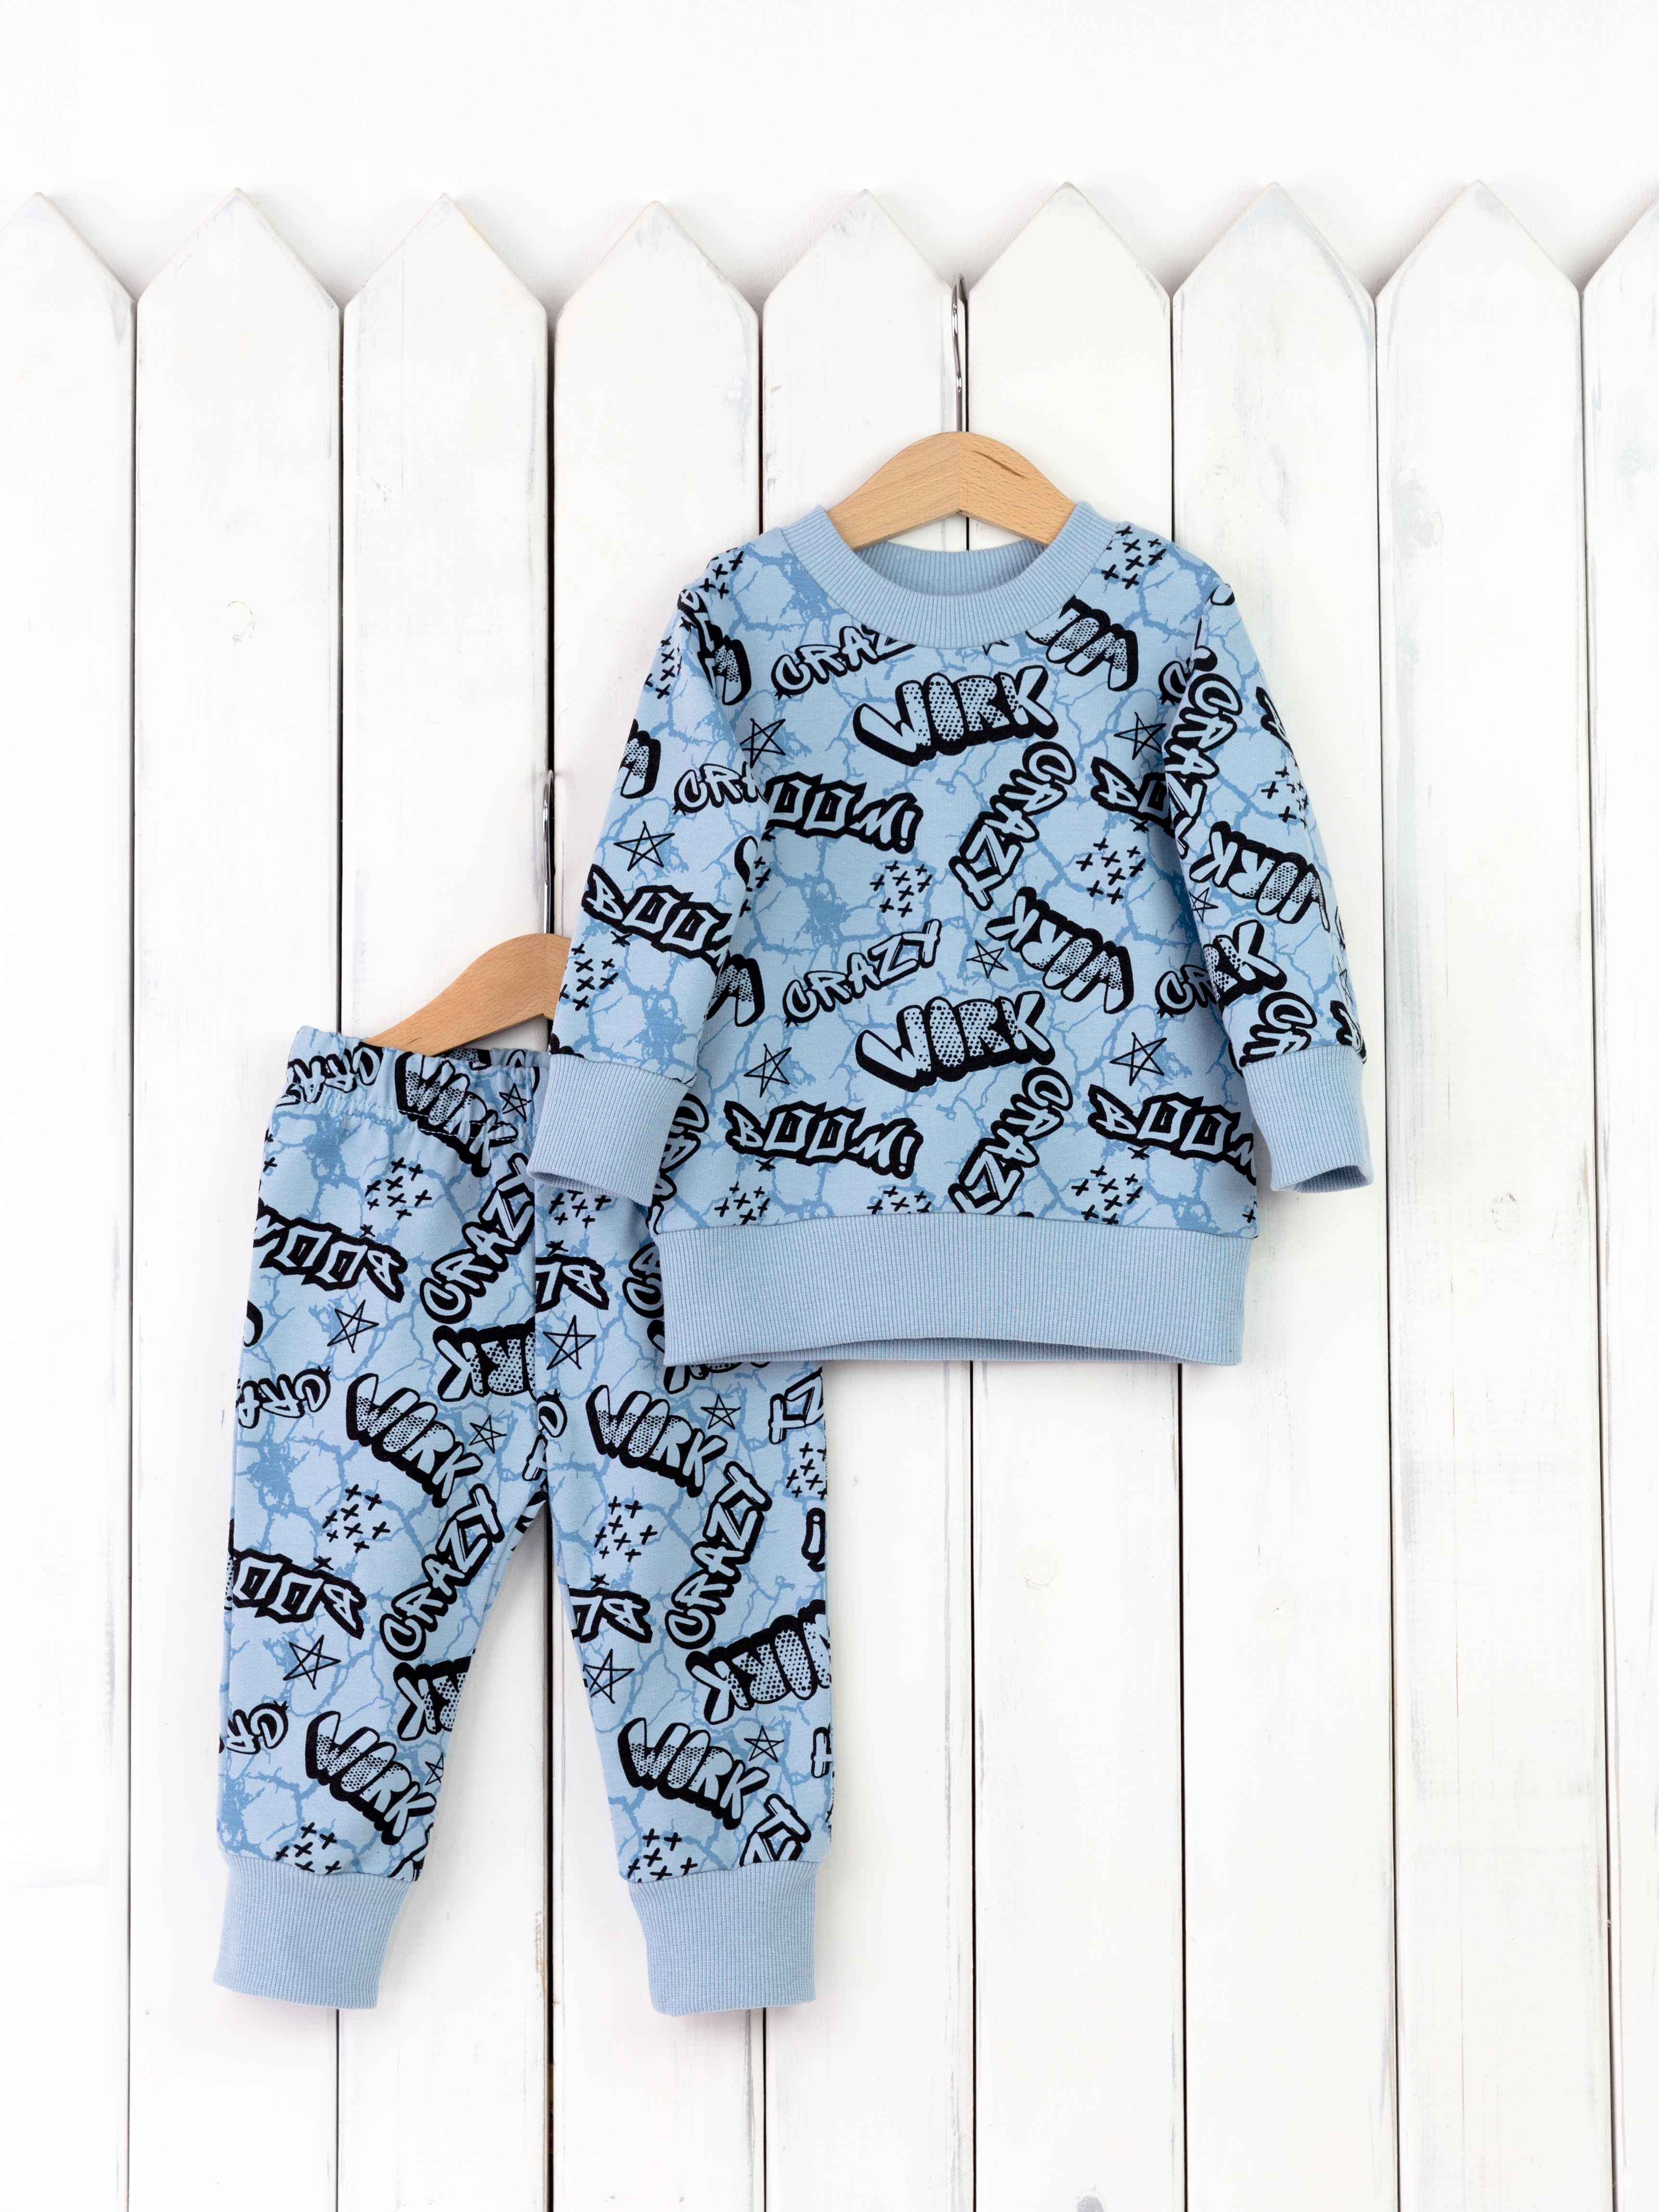 КД402/6-Ф Комплект детский р.86 джемпер+брюки/надписи на голубом Бэби Бум - Оренбург 